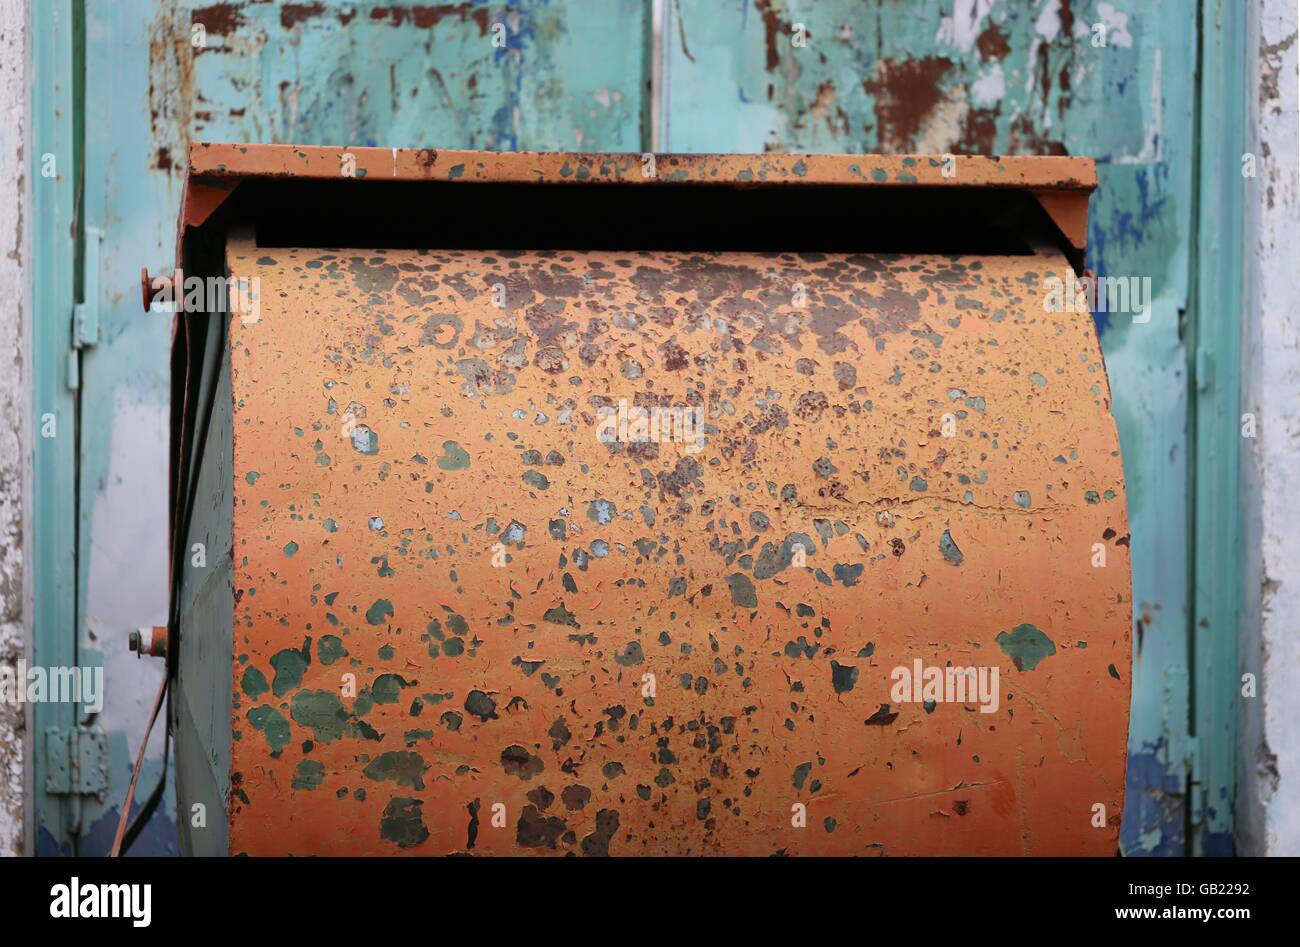 Paper Recycling Container. Rusty orange public paper recycling container, in front of old   turquoise door. Stock Photo